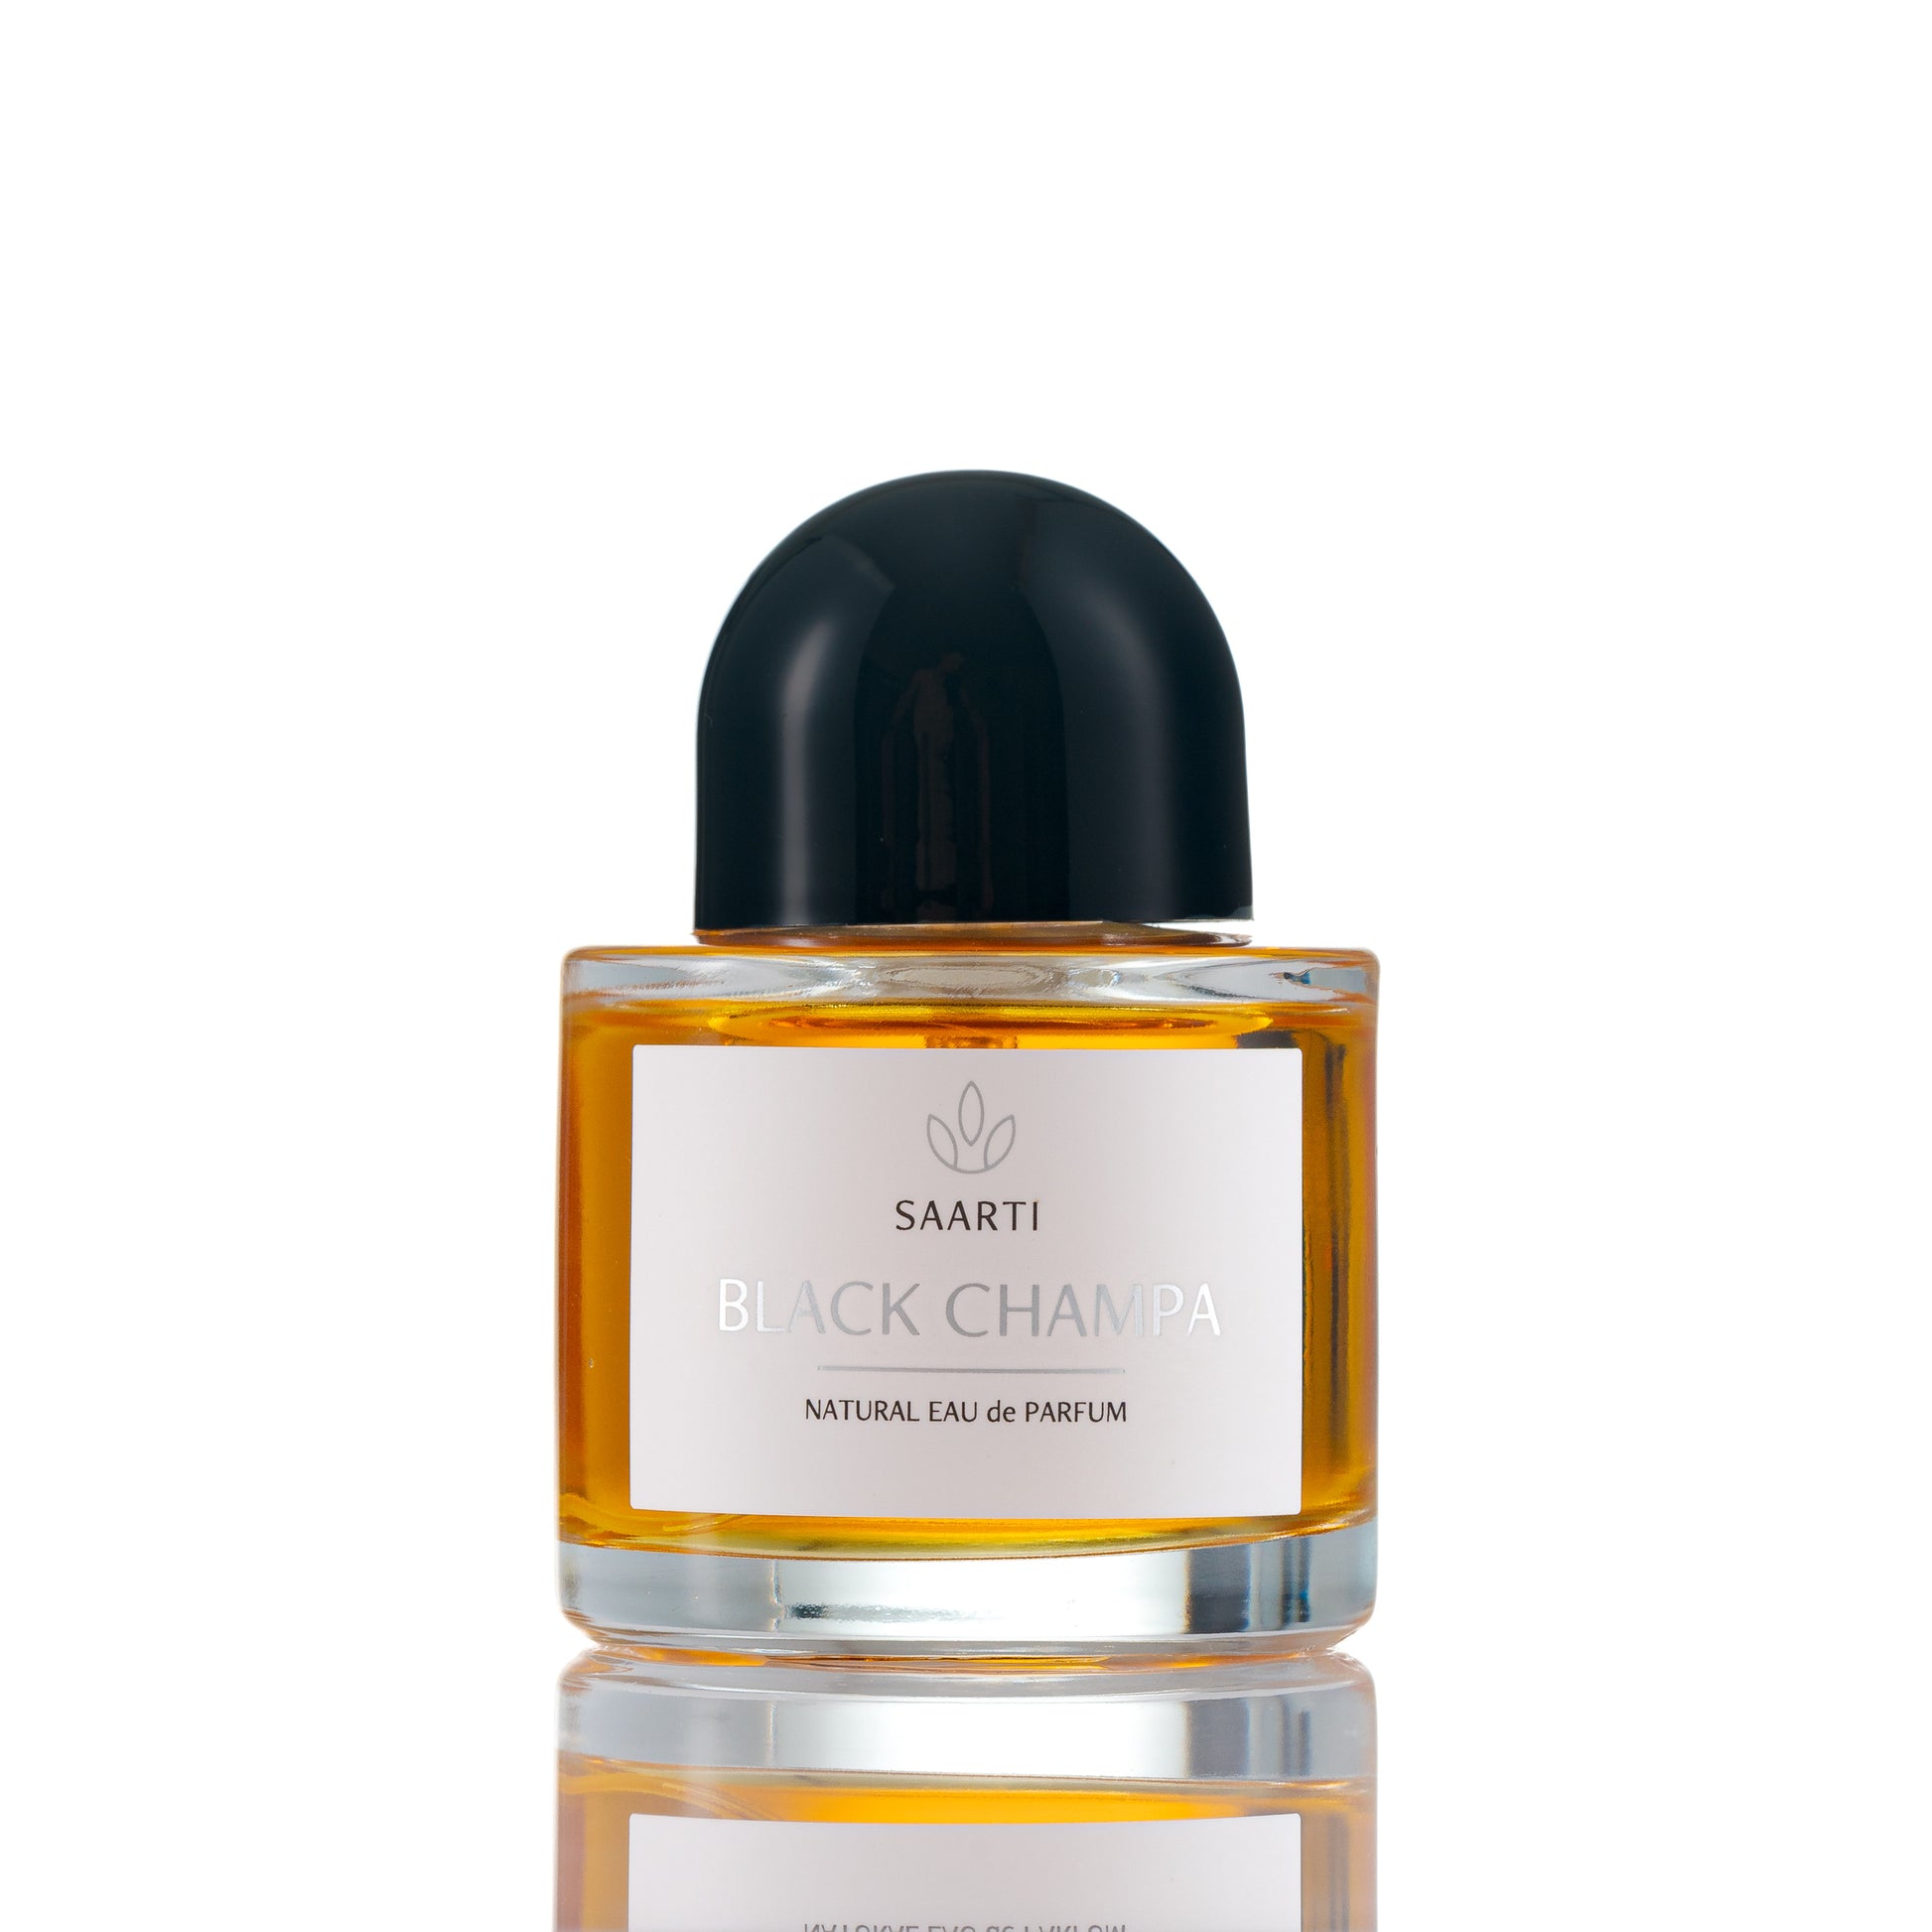 black champa natural perfume with oud and champaca essential oil niche perfumery brand saarti